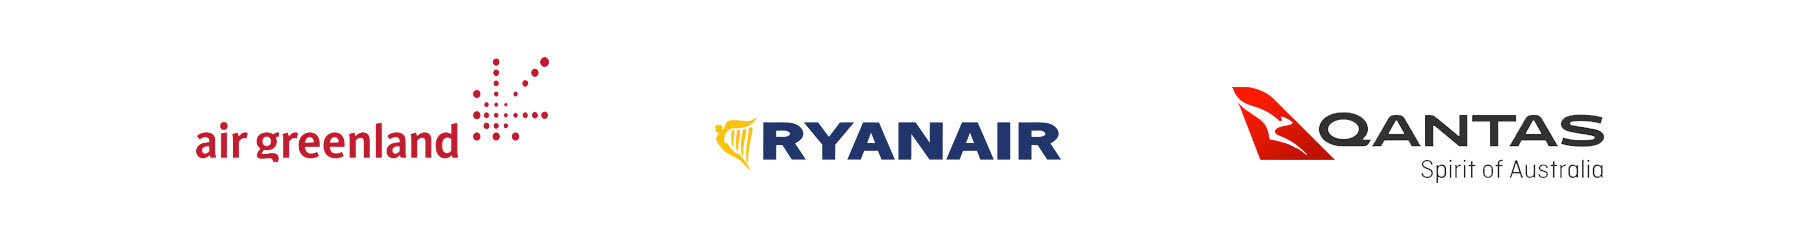 Commercial Partners Air Greenland, Ryanair and Qantas